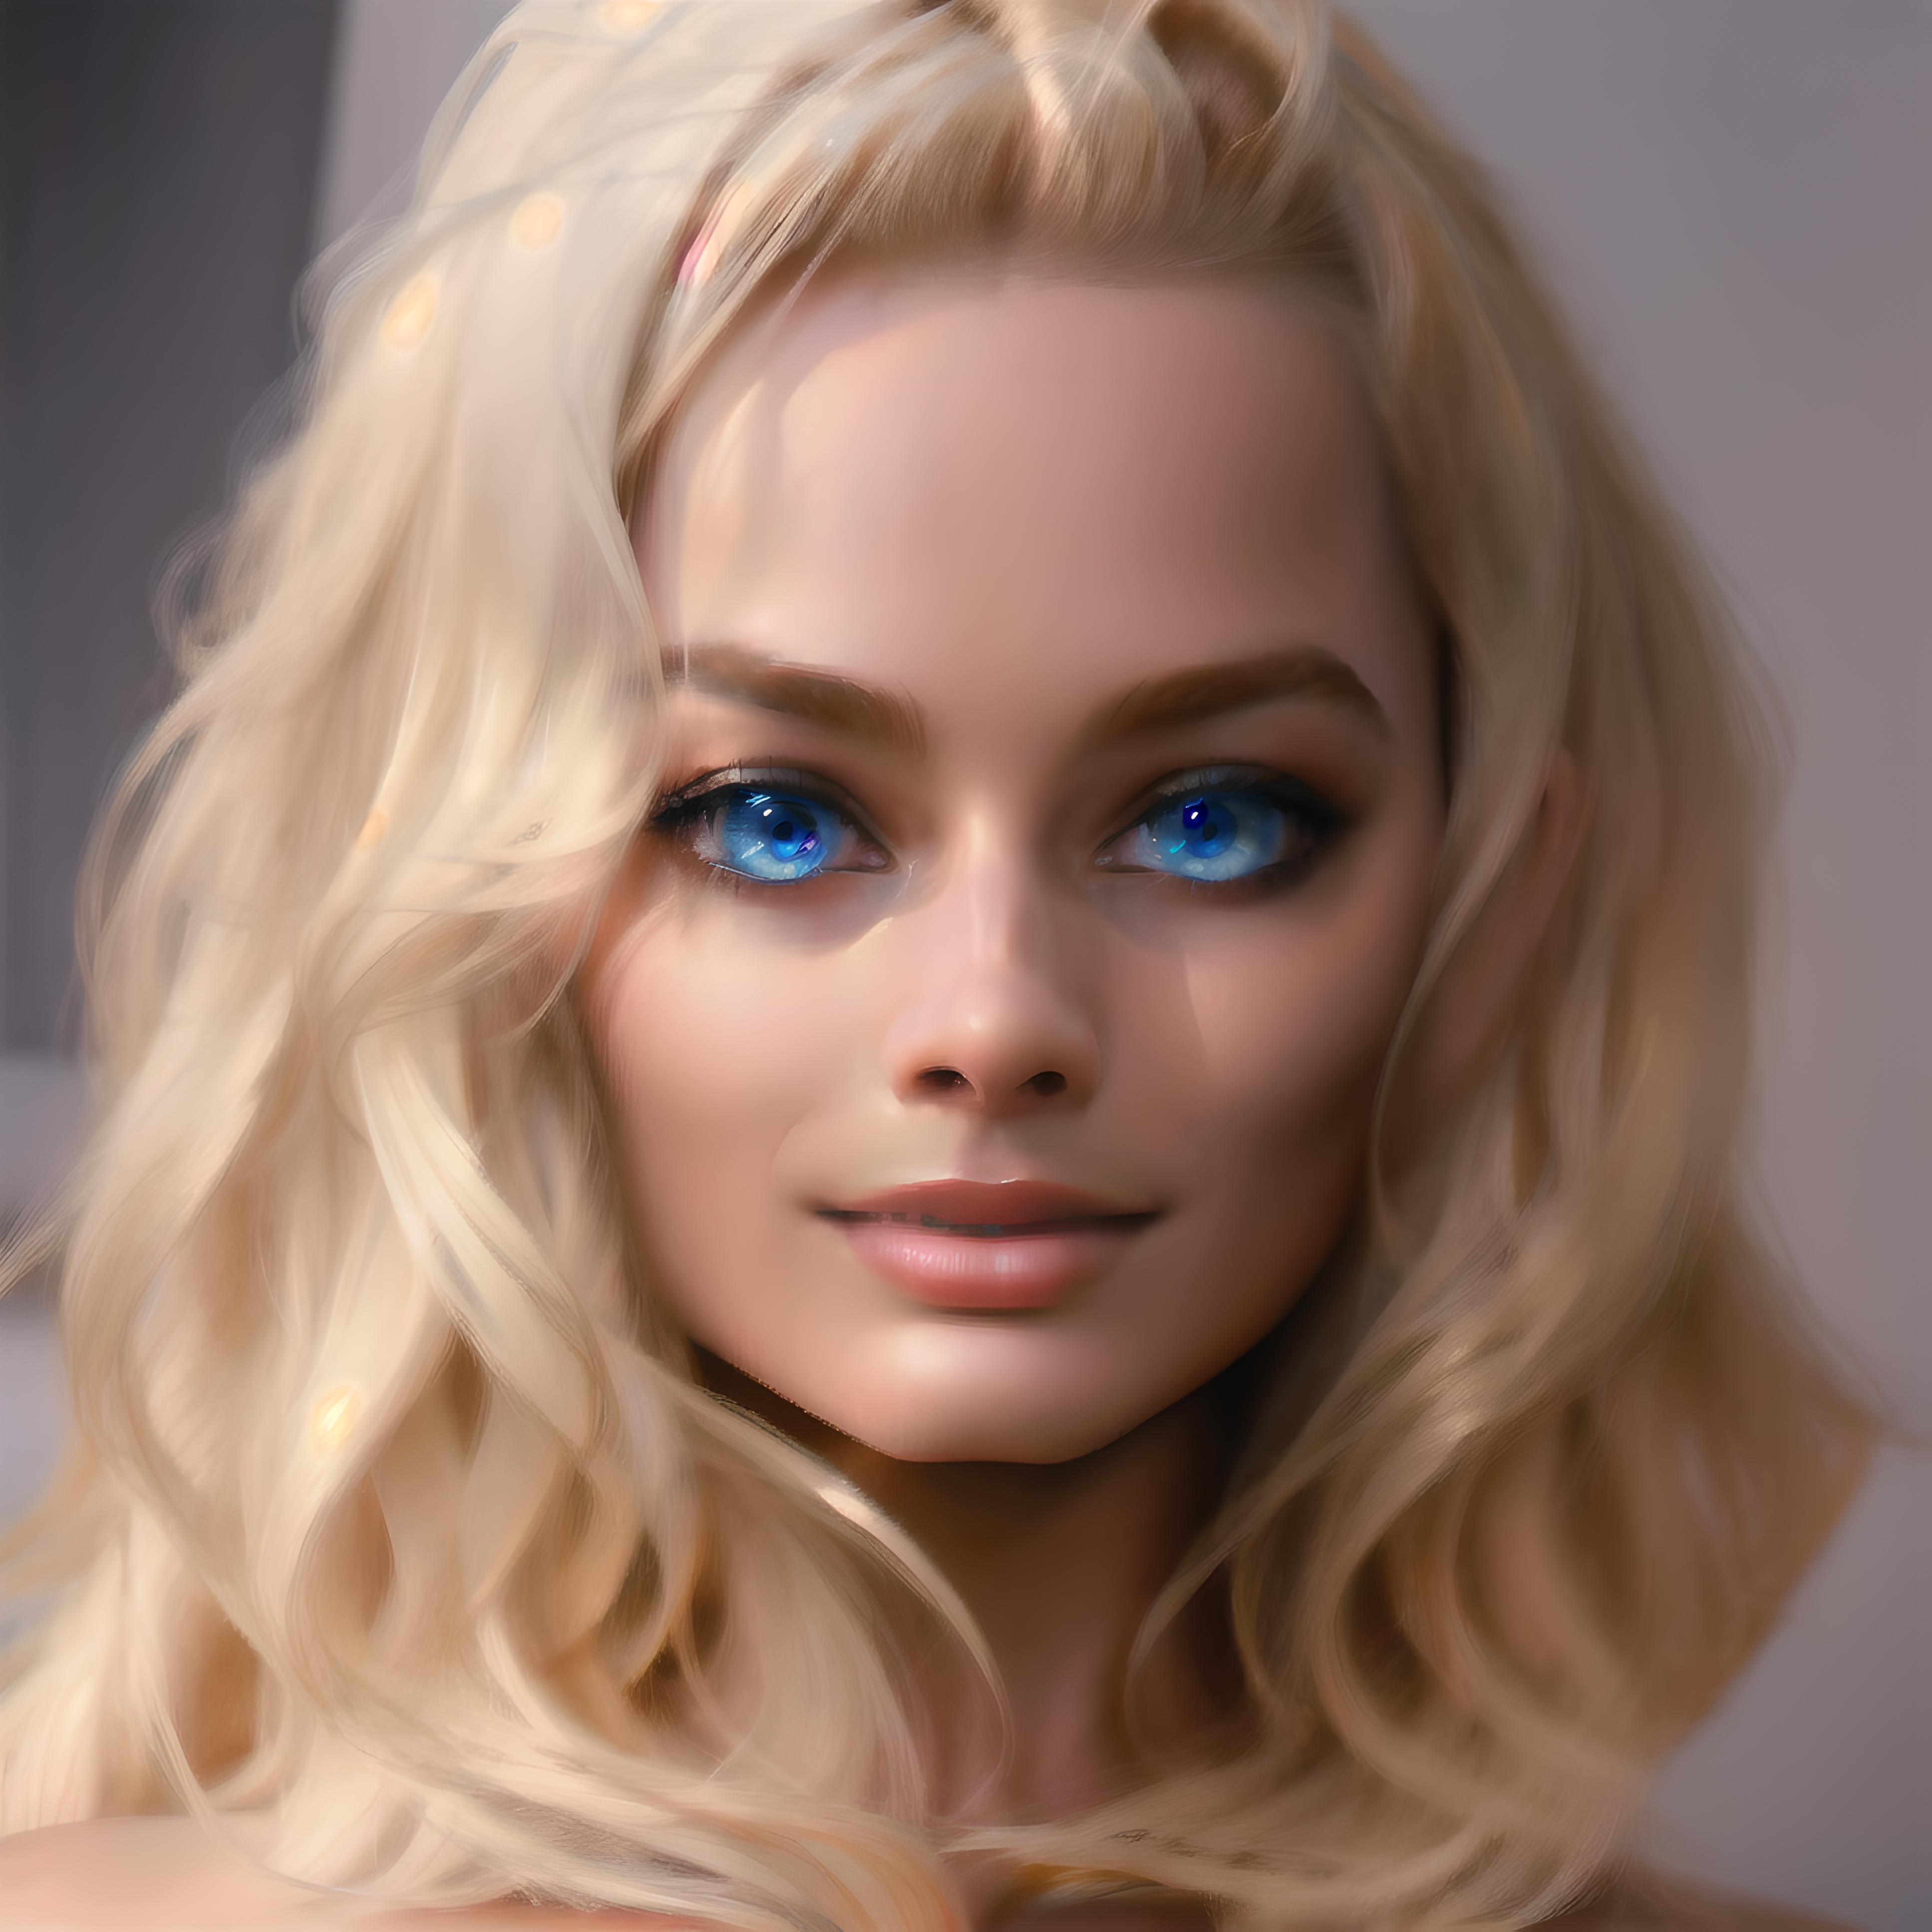 AI model image by steffangund